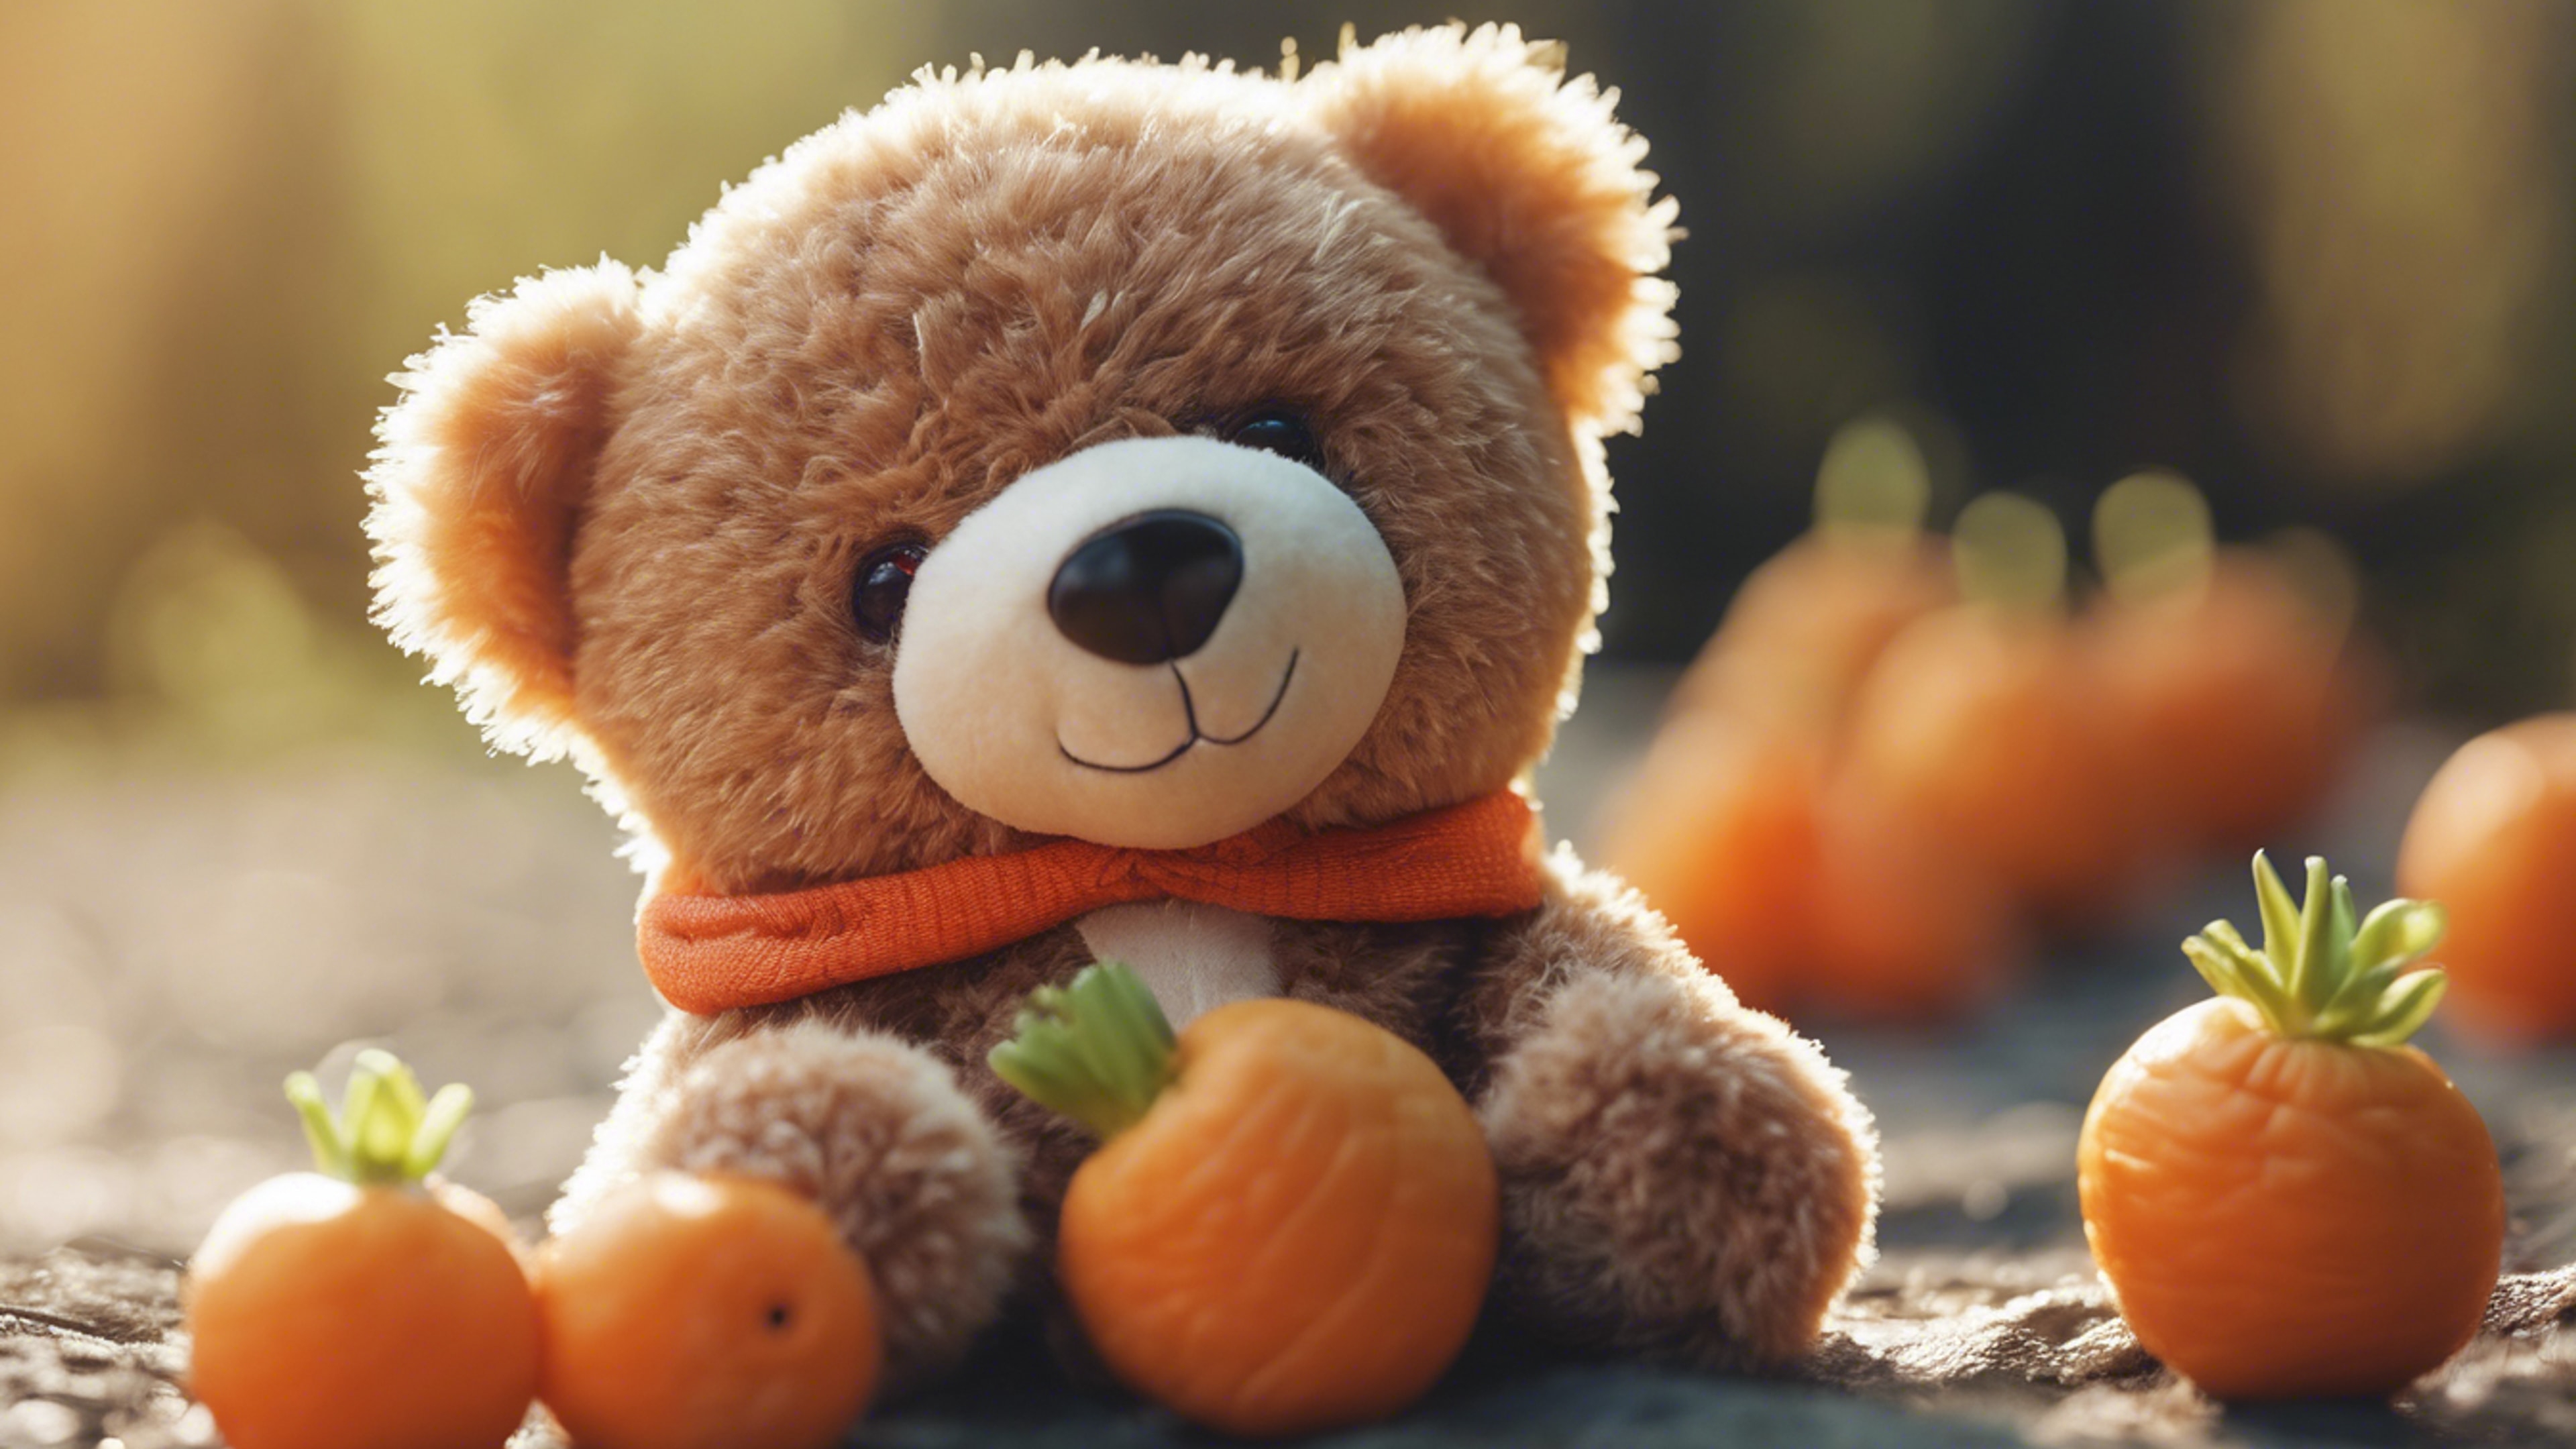 An adorable kawaii teddy bear clutching a brilliant orange carrot. Wallpaper[5ef031681579492baf99]